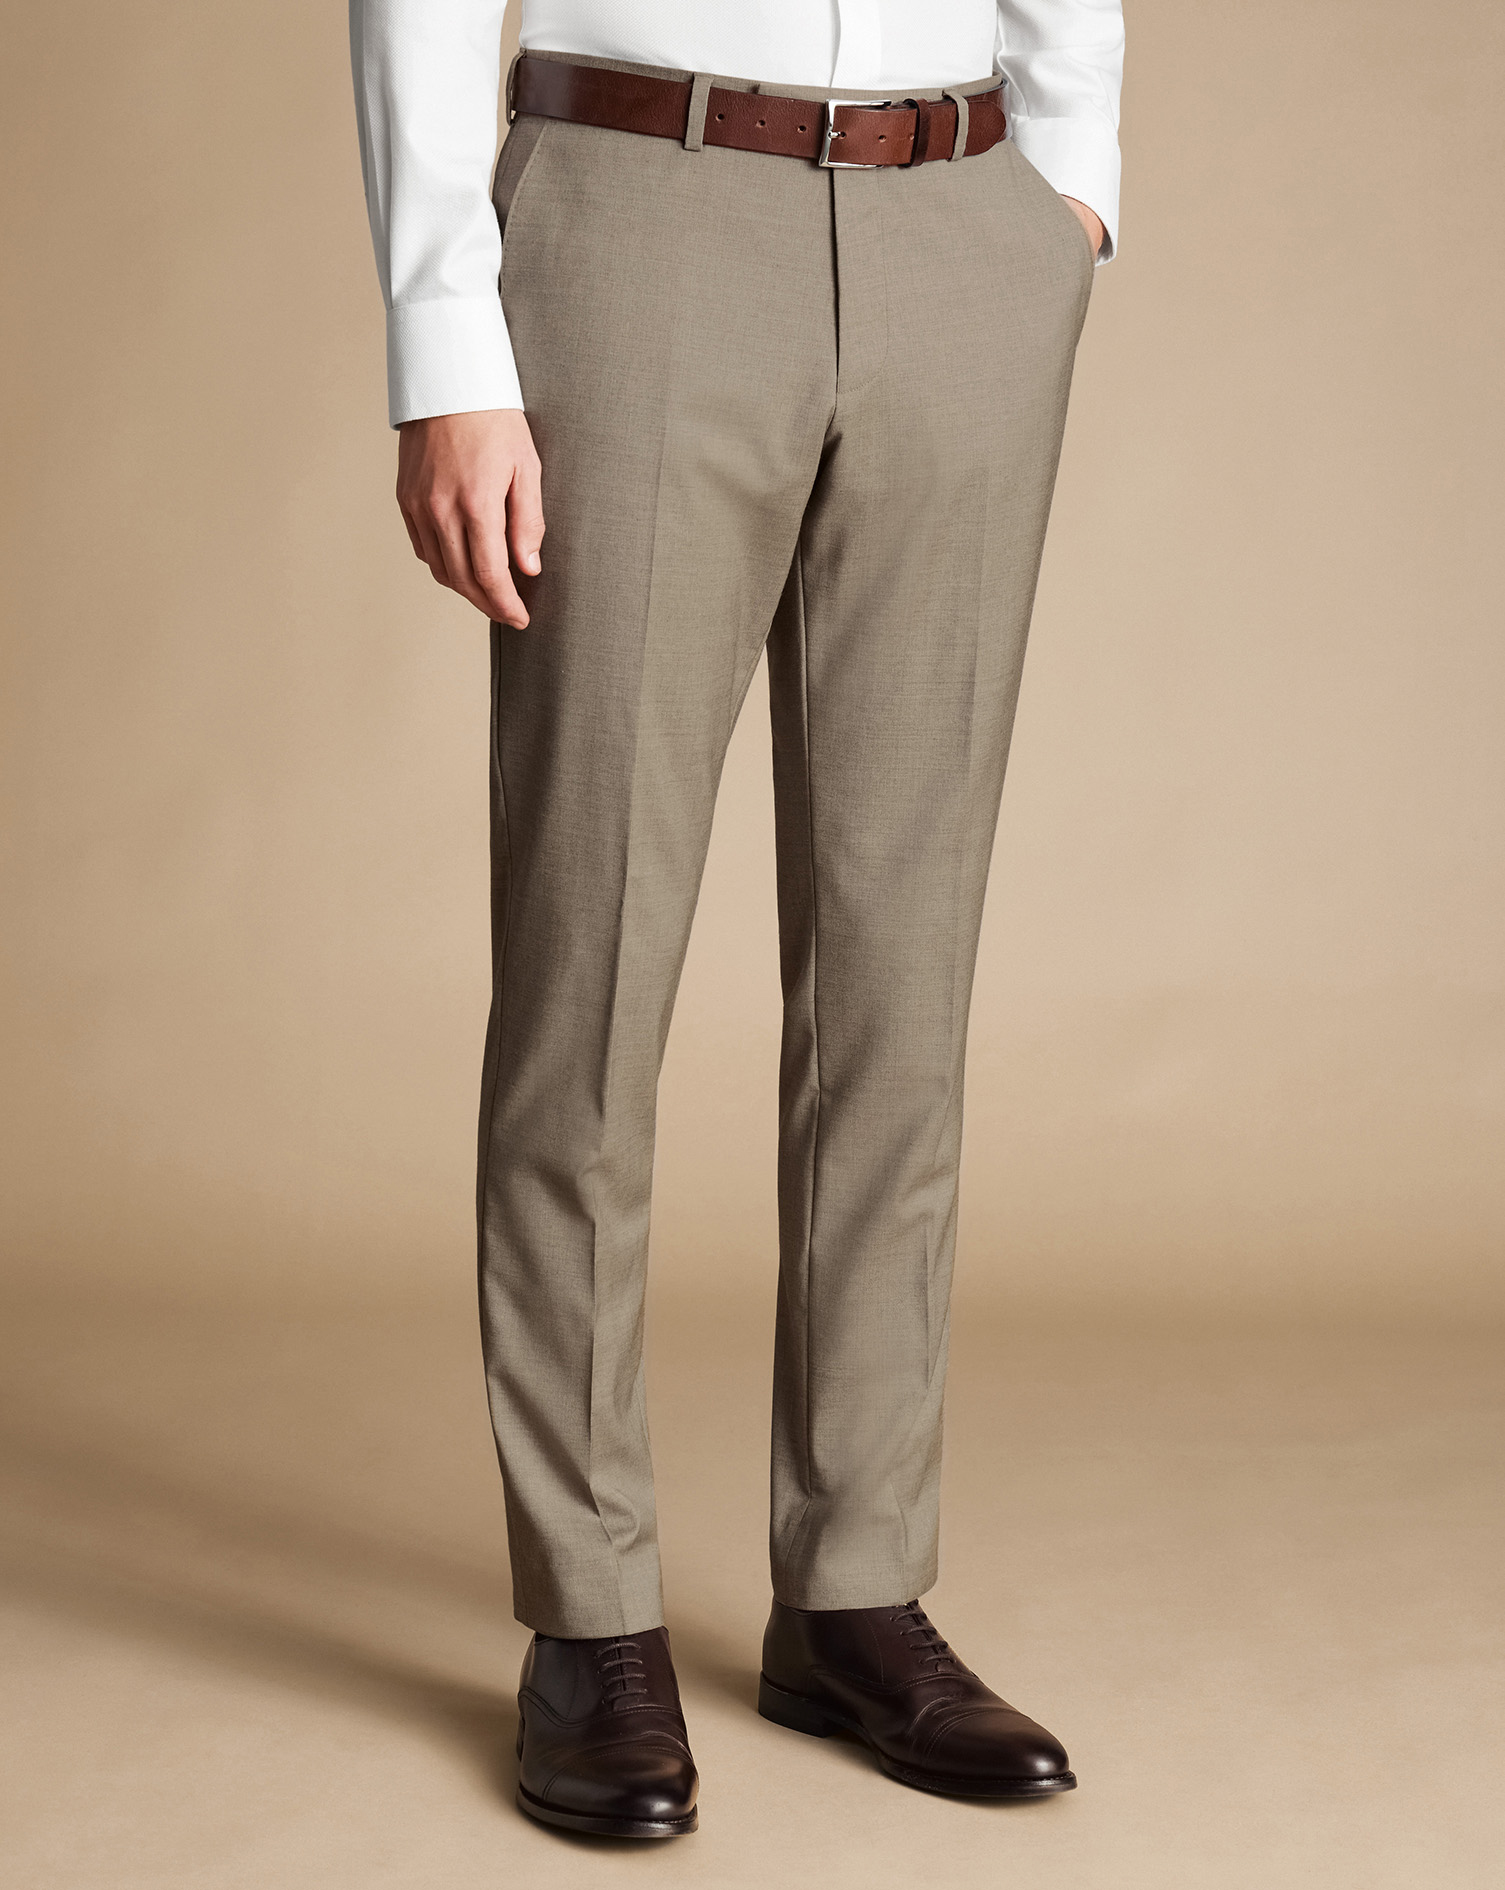 Men's Charles Tyrwhitt Italian Suit Trousers - Mocha Size 38/38
